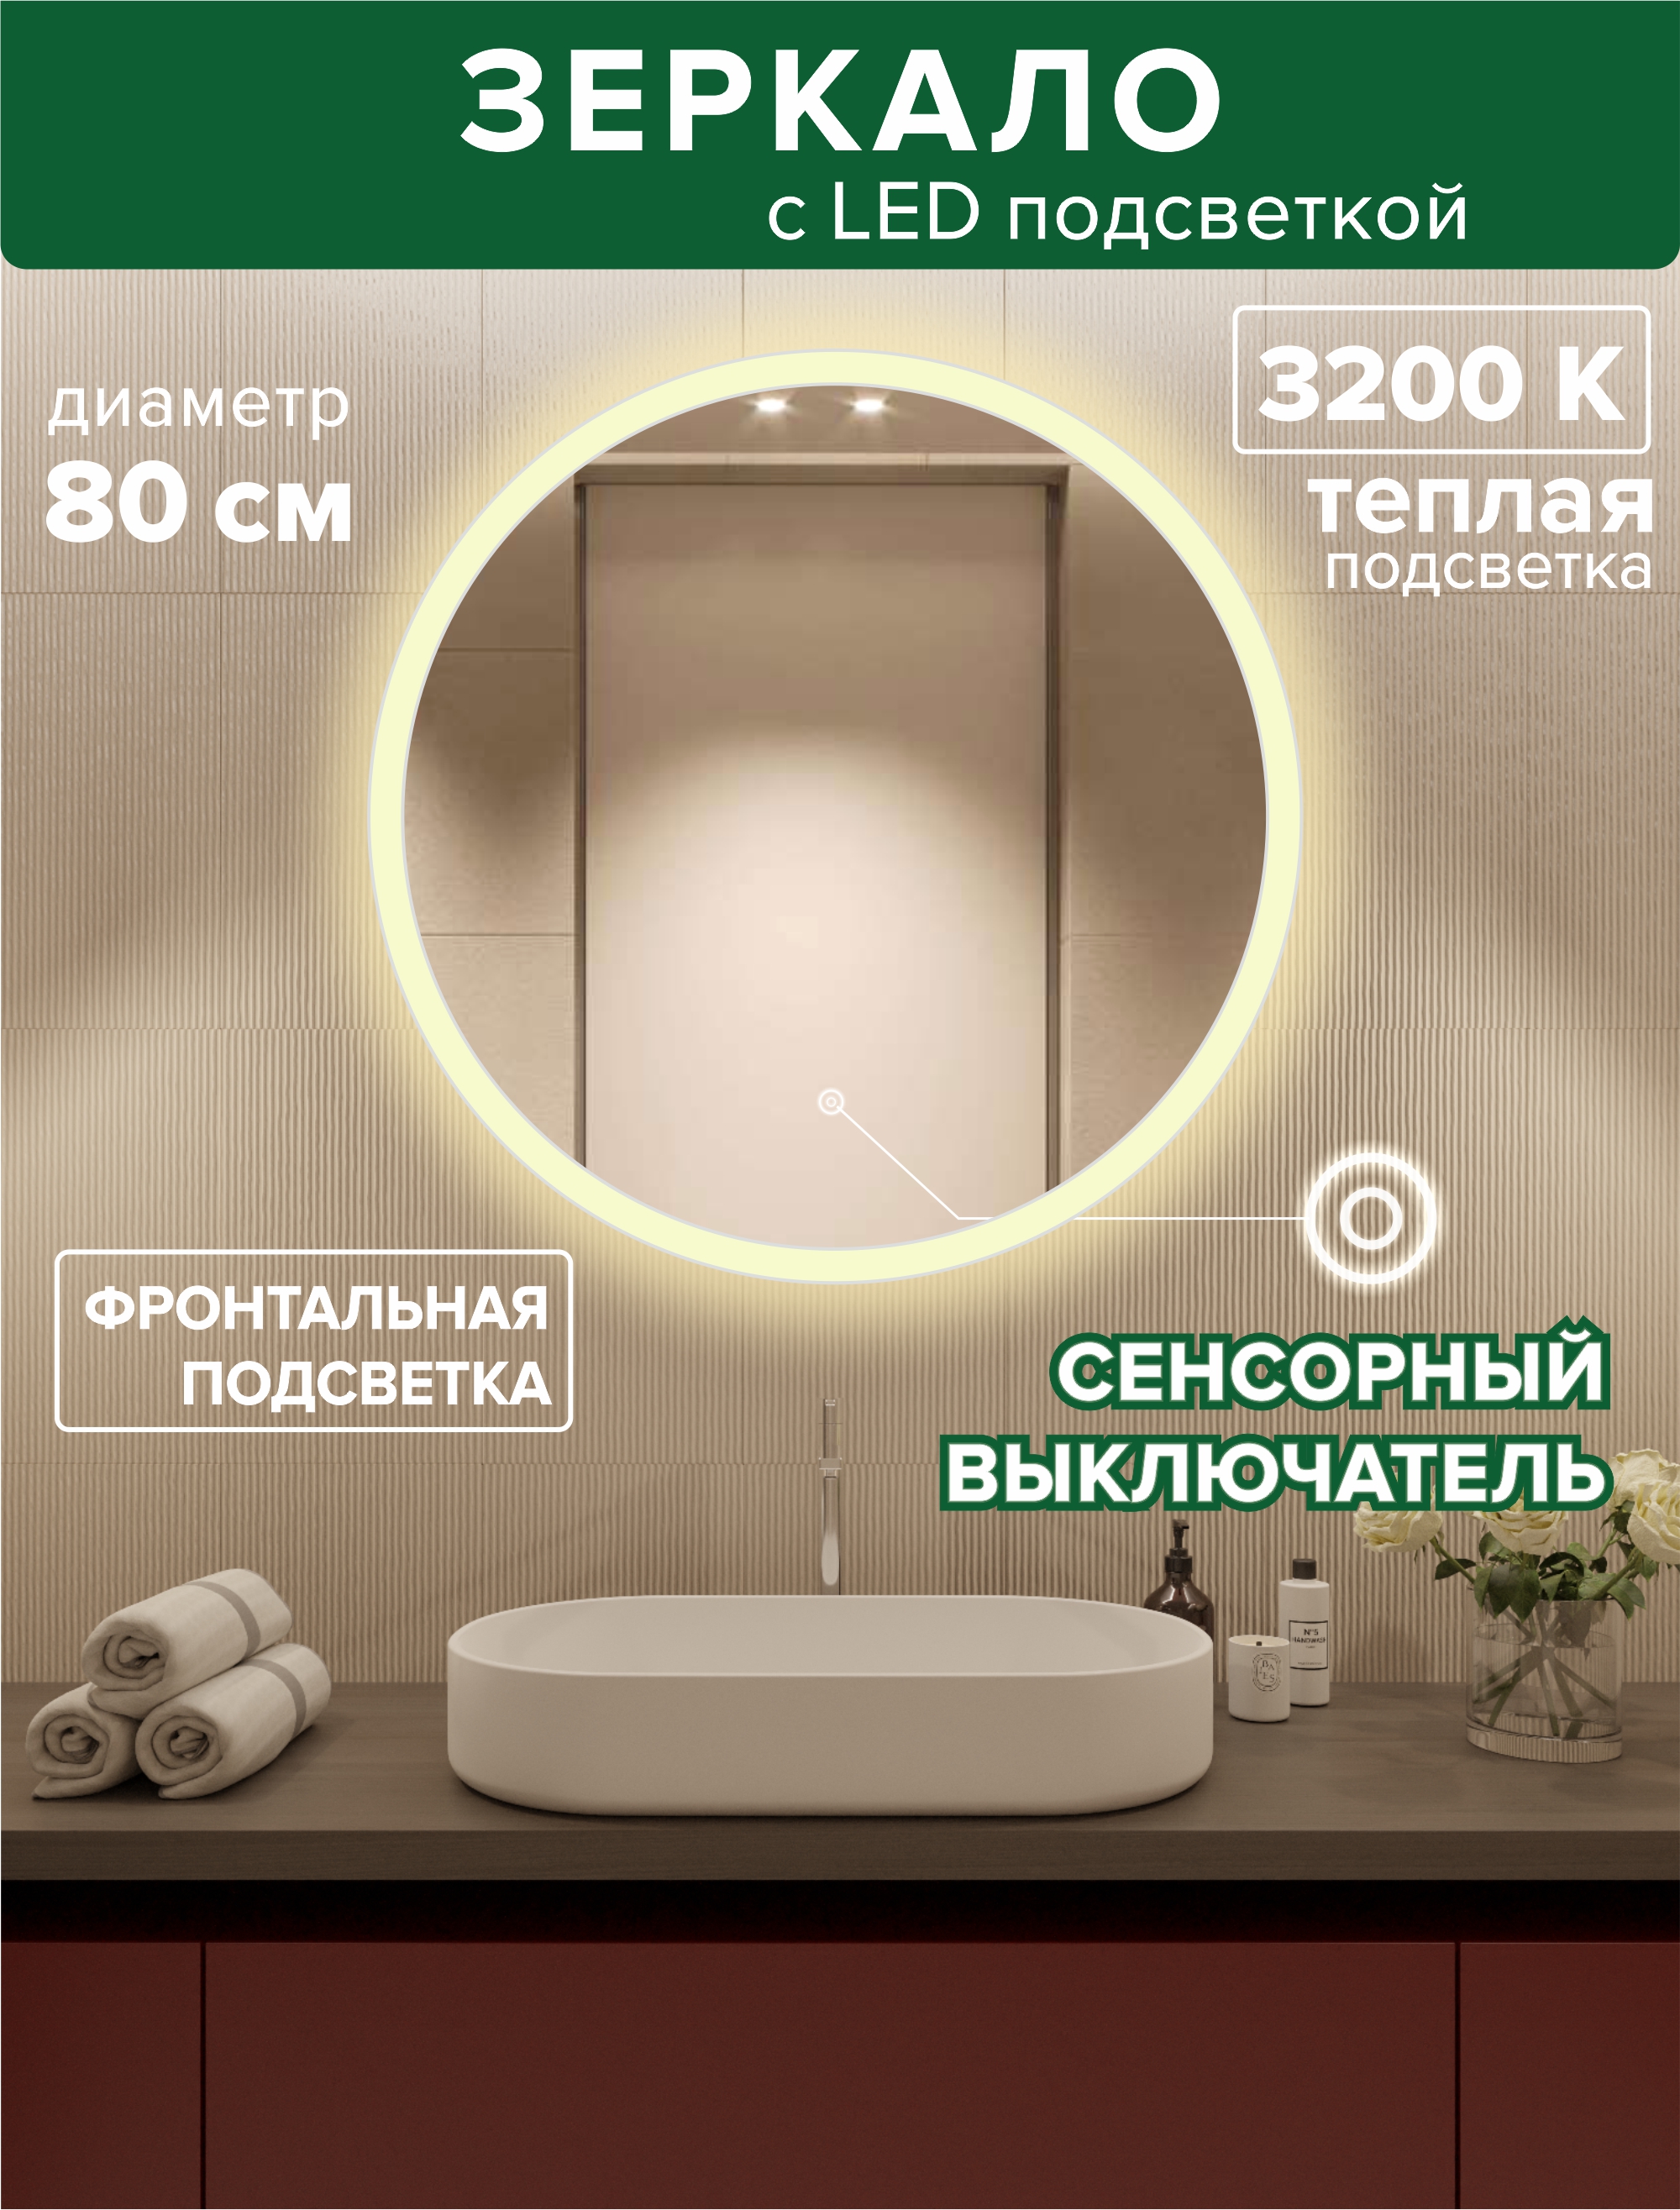 Зеркало для ванной Alfa Mirrors фронтальная теплая подсветка 3200К, круглое 80см, MSvet-8t led plr 100 10m 24v ww bl w o белая теплая провод соединяемая без силового шнура 24вольта